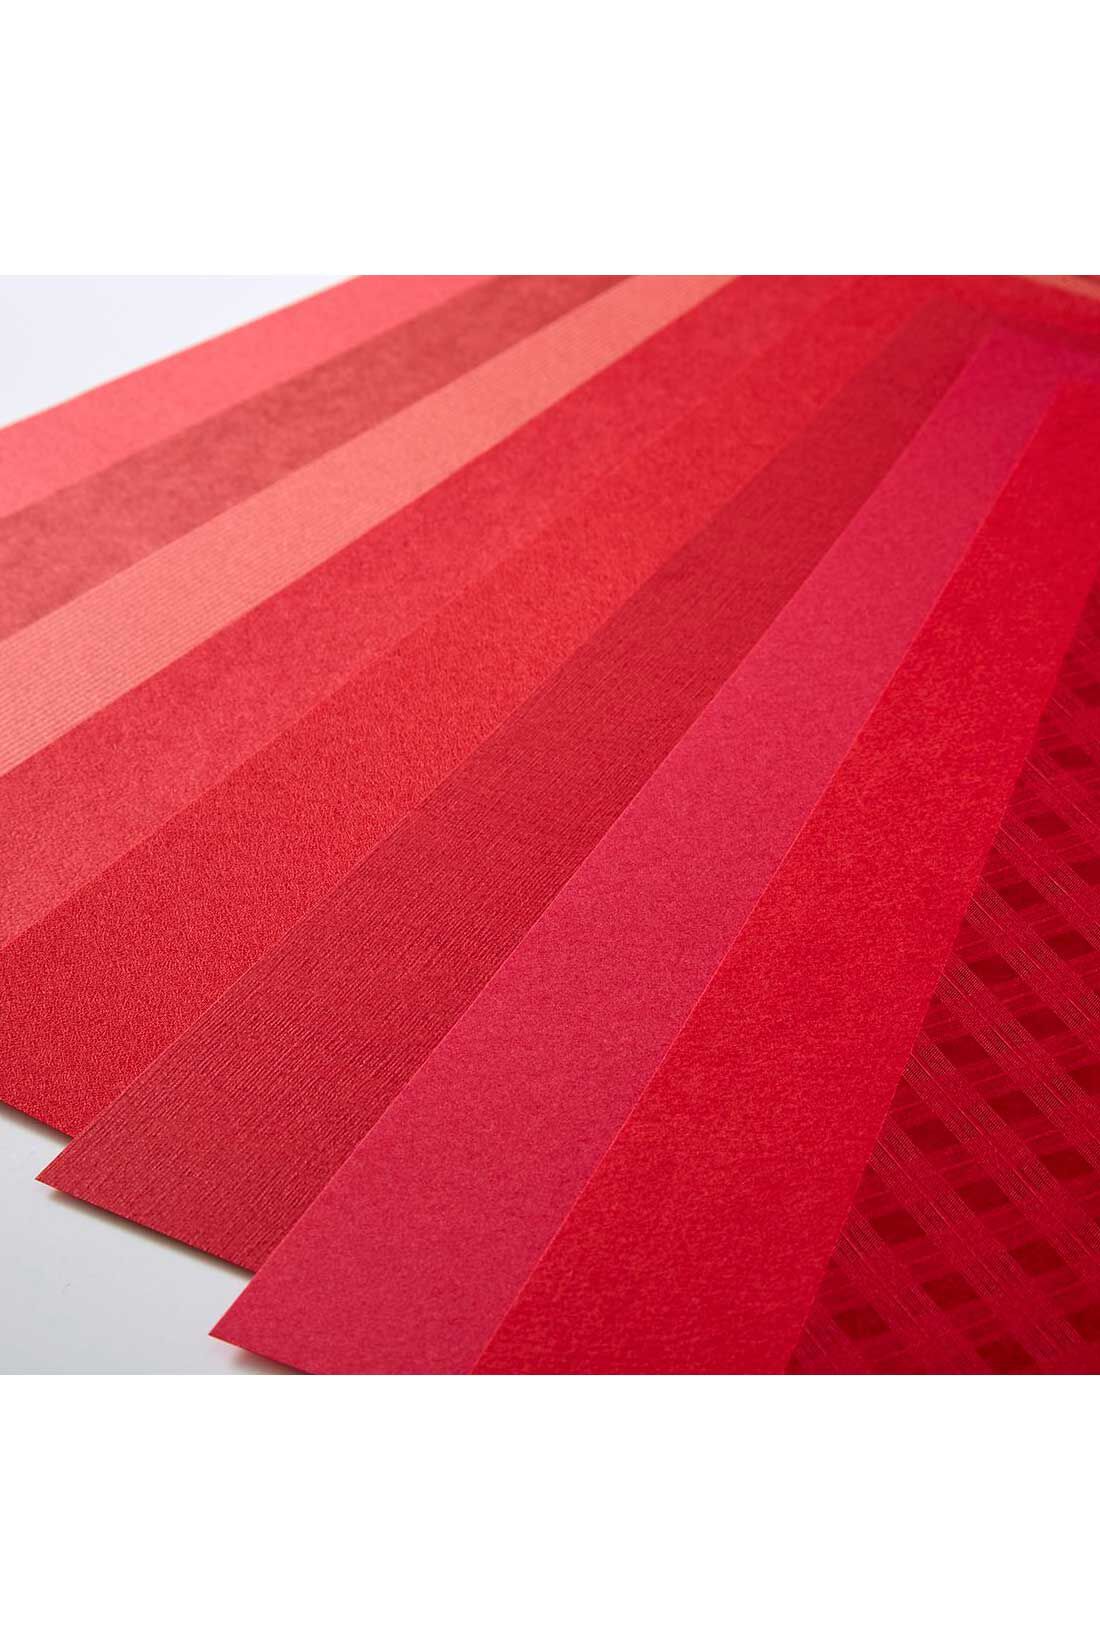 OSYAIRO|OSYAIRO 紙の専門商社竹尾が選ぶ　色を楽しむ紙セットの会〈赤〉|同じ赤でも紙の表情はざまざまです。